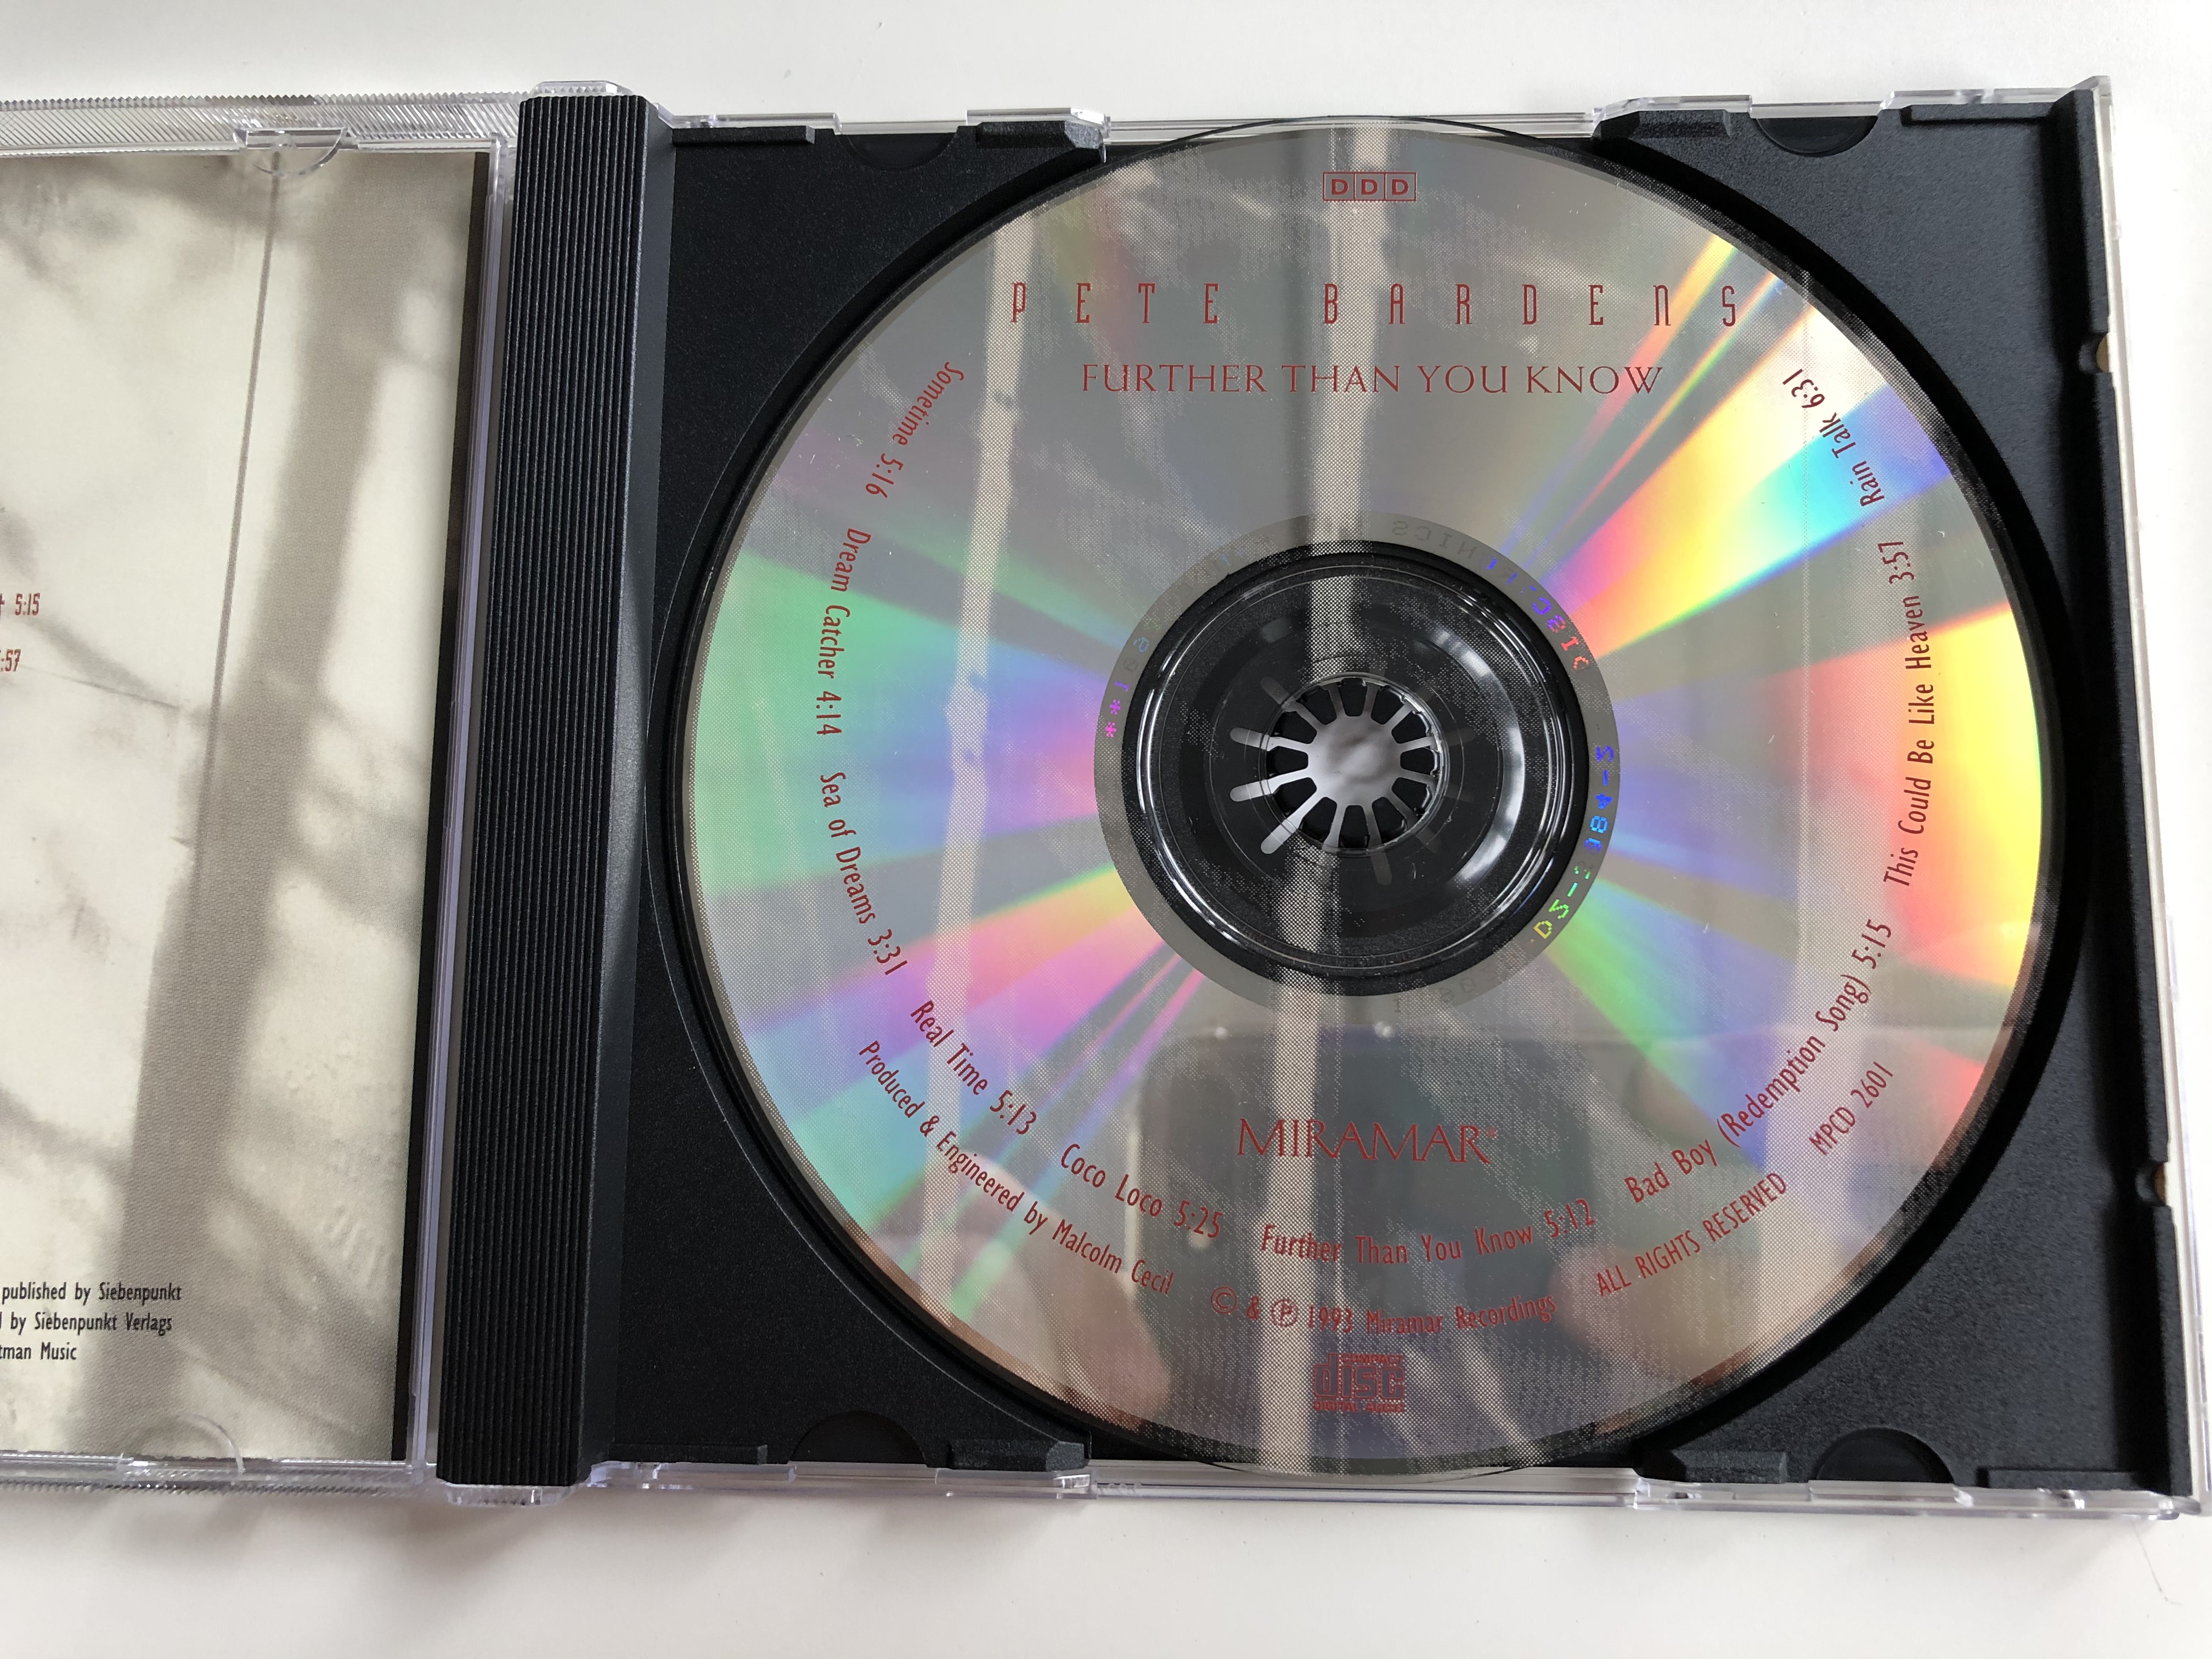 pete-bardens-further-than-you-know-miramar-audio-cd-1993-mpcd-2601-3-.jpg